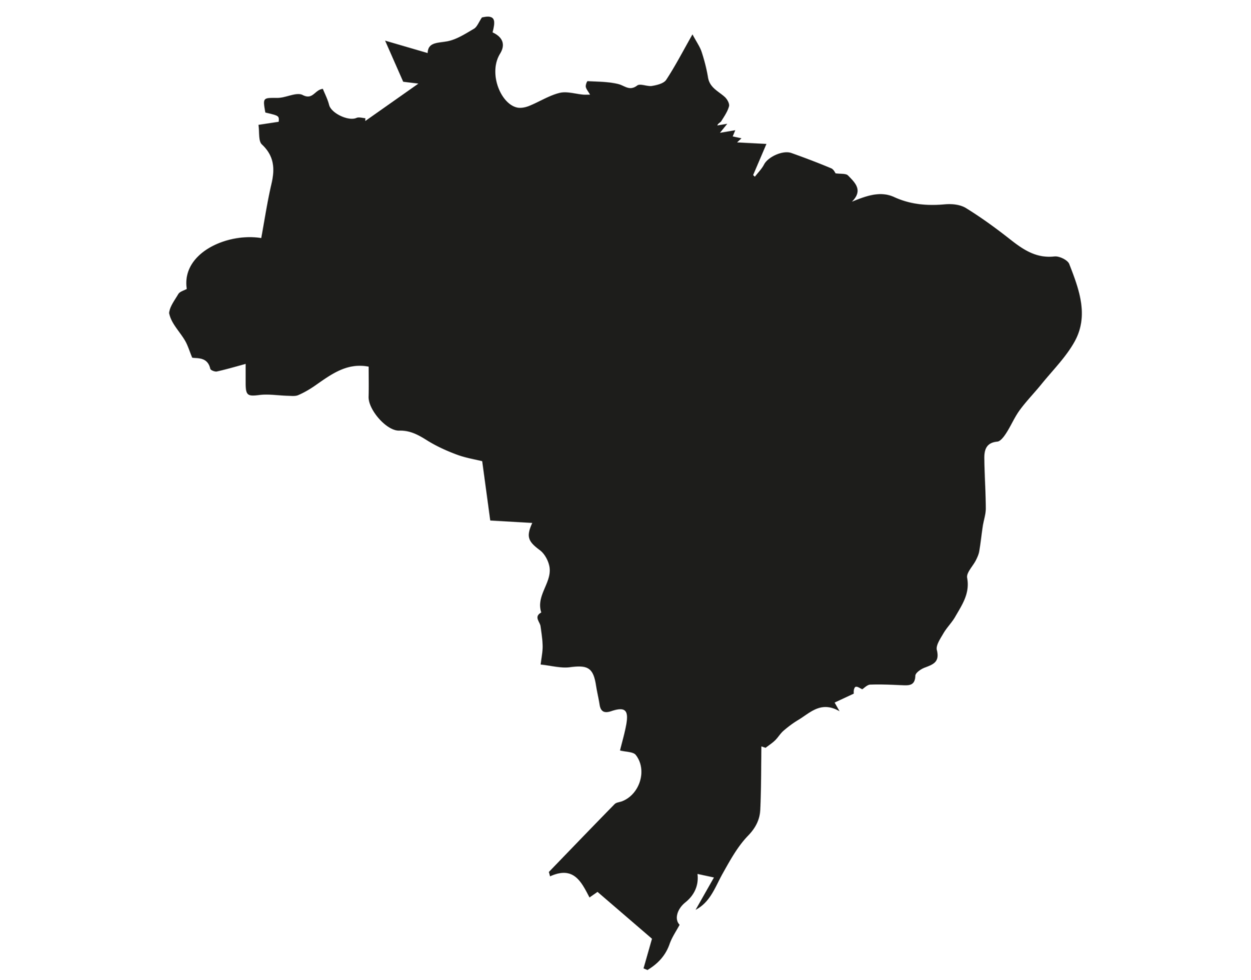 brasile carta geografica png su trasparente sfondo